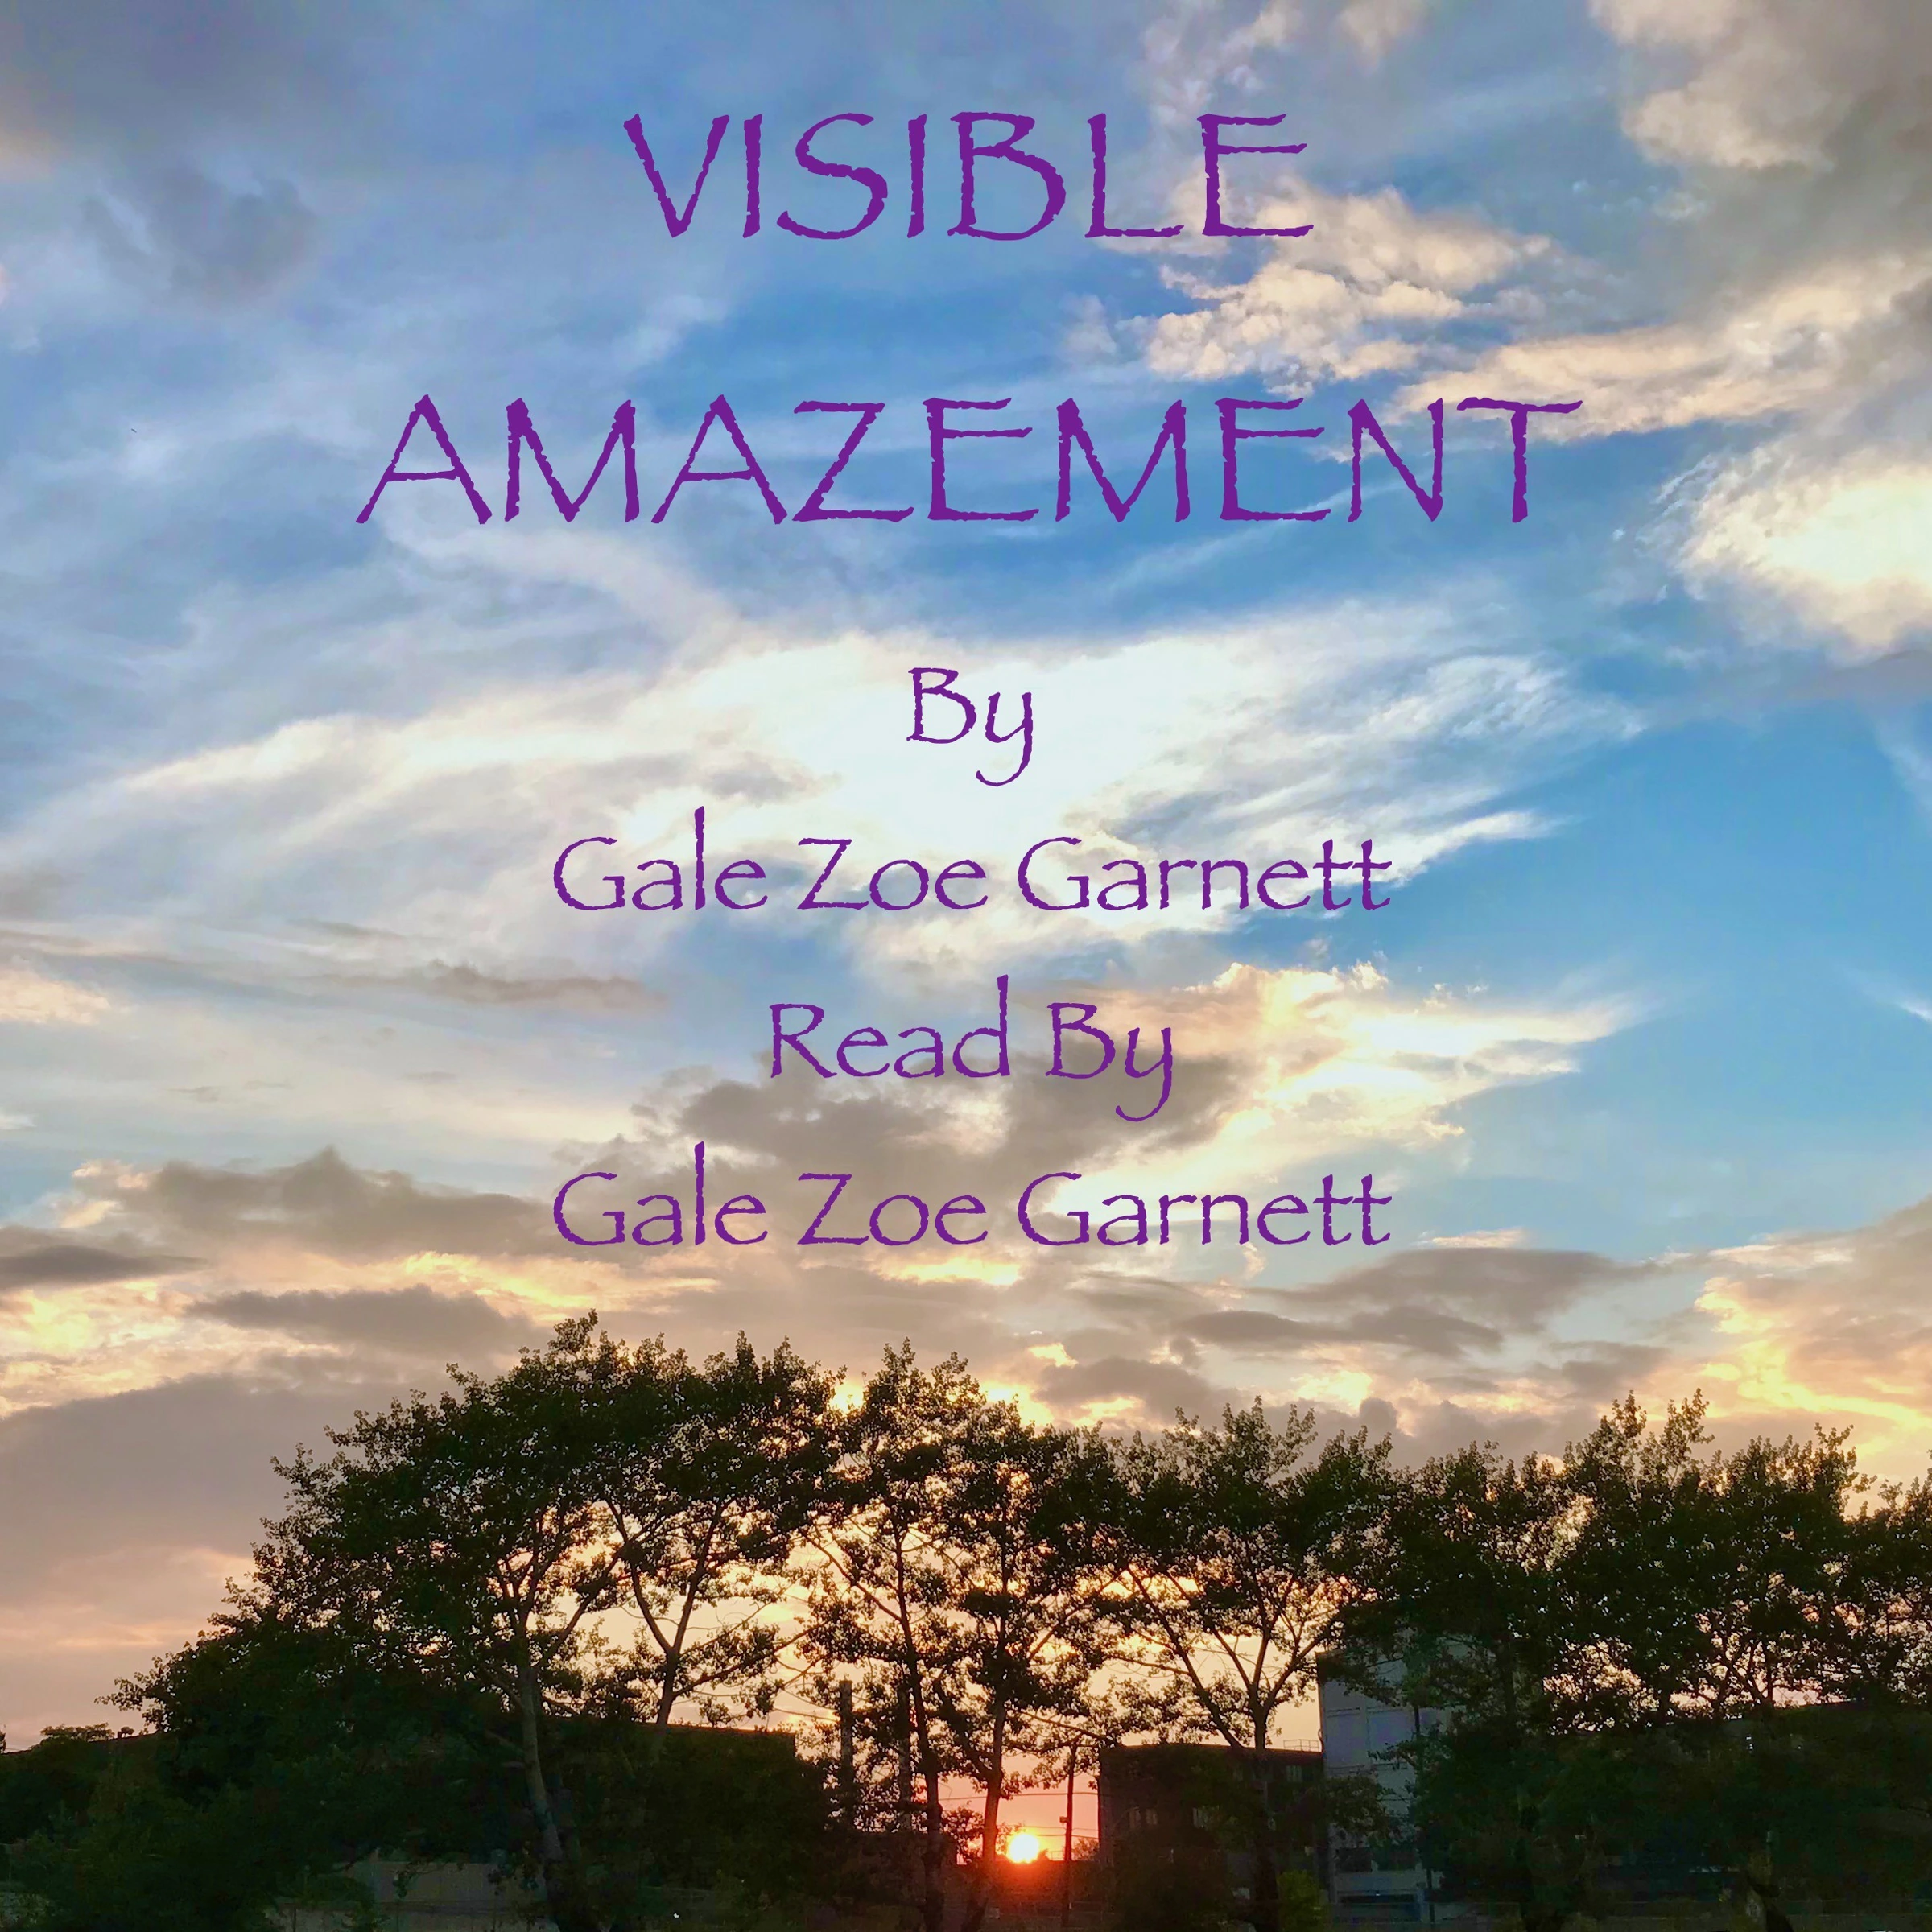 Visible Amazement by Gale Zoë Garnett Audiobook